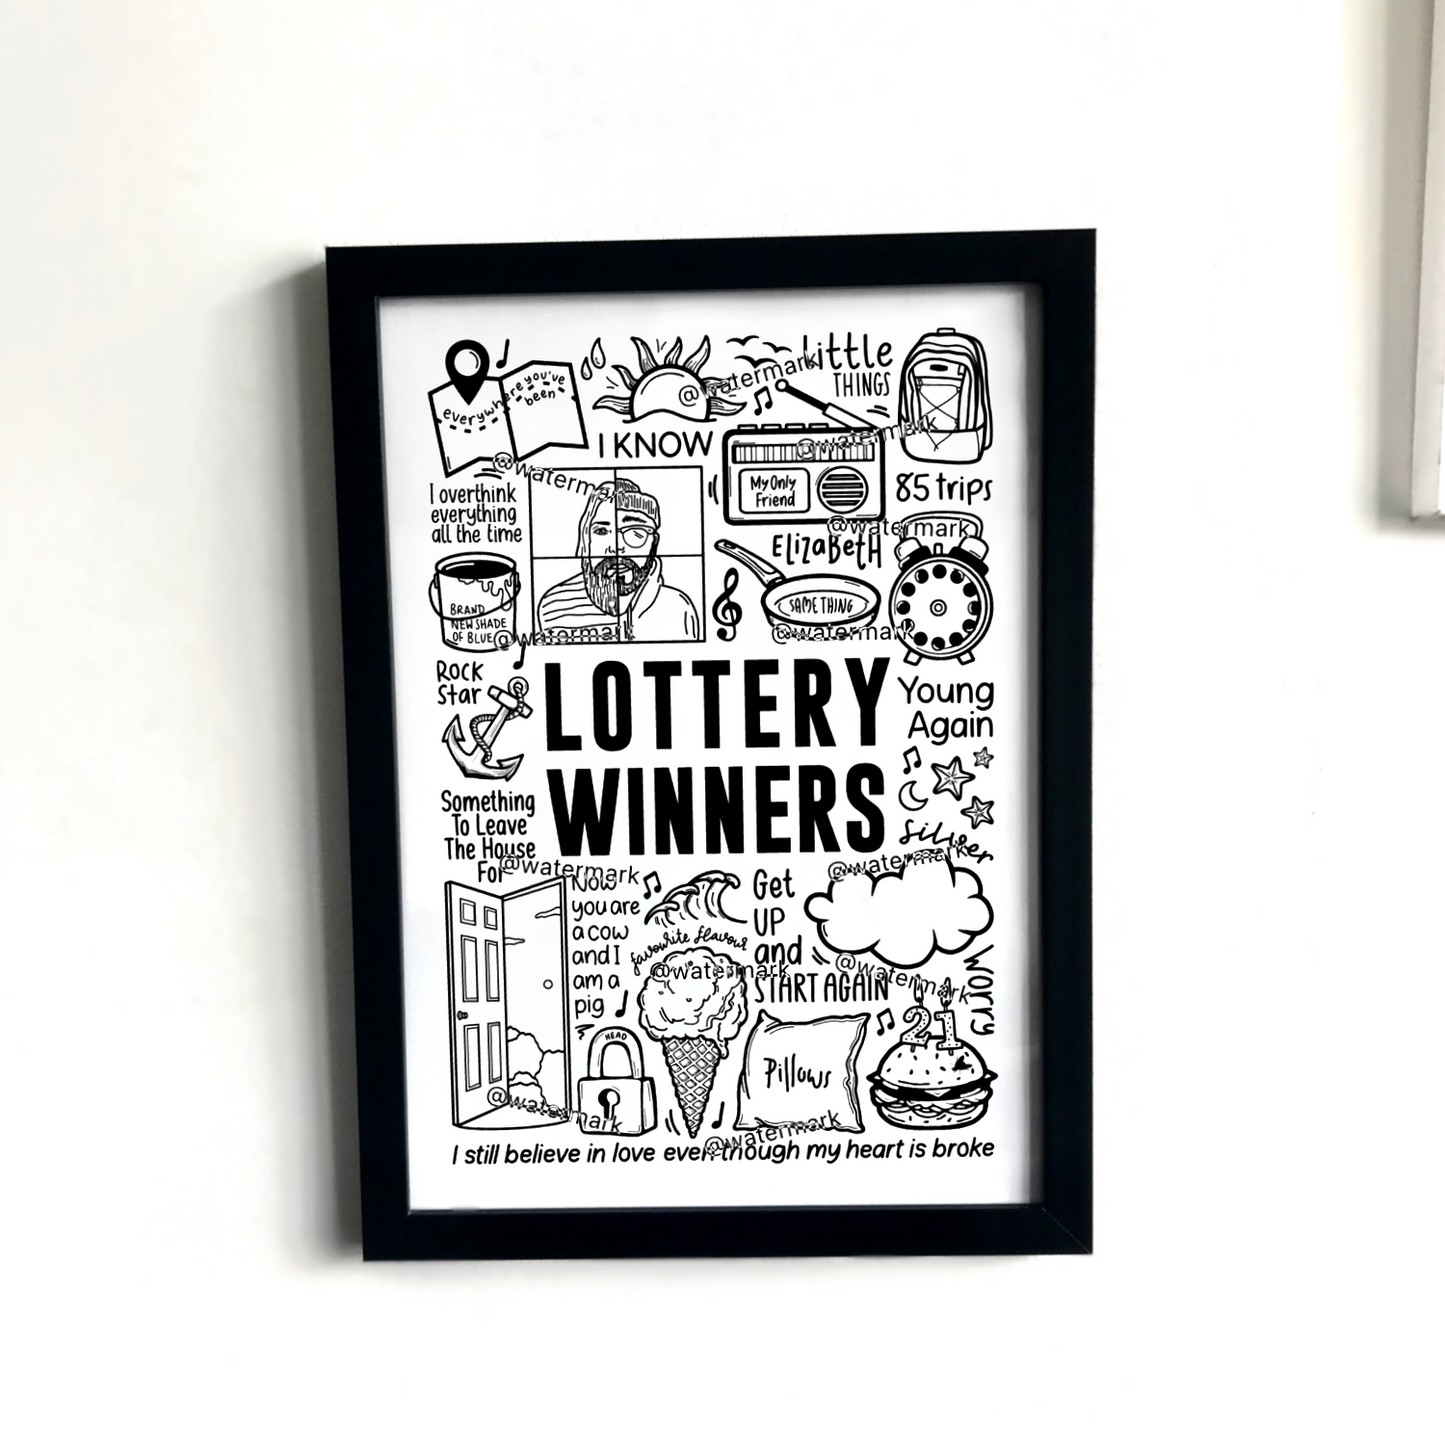 The Lottery Winners print